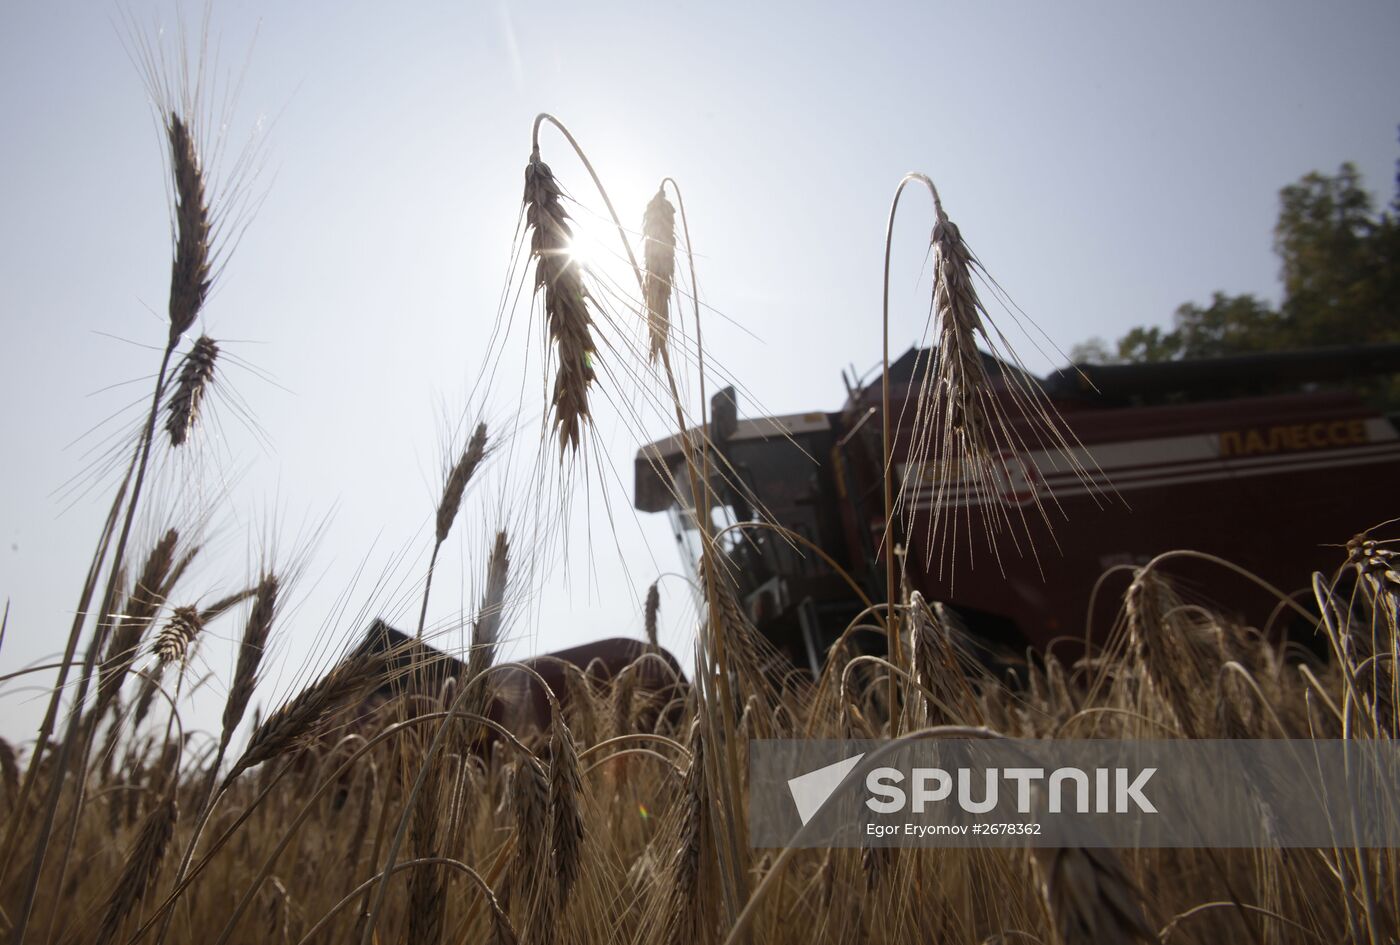 Harvesting grain in Belarus